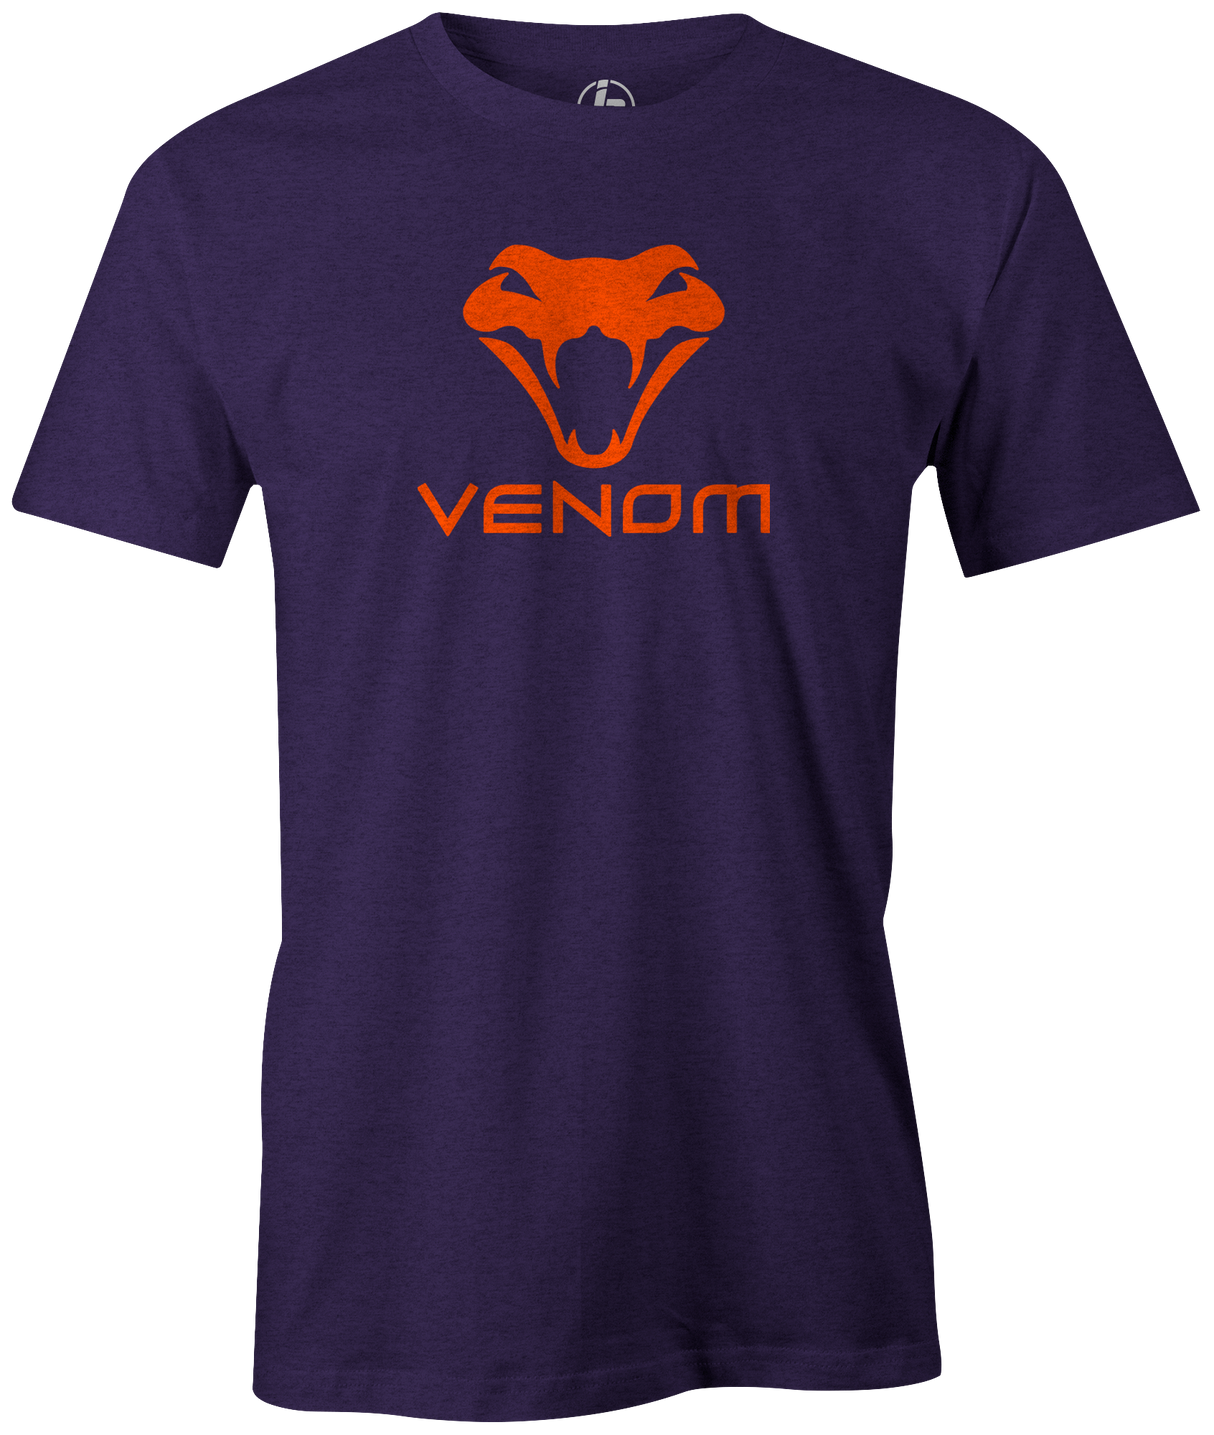 motiv venom shock t shirt leagues tournaments mid price bowling ball shirt purple